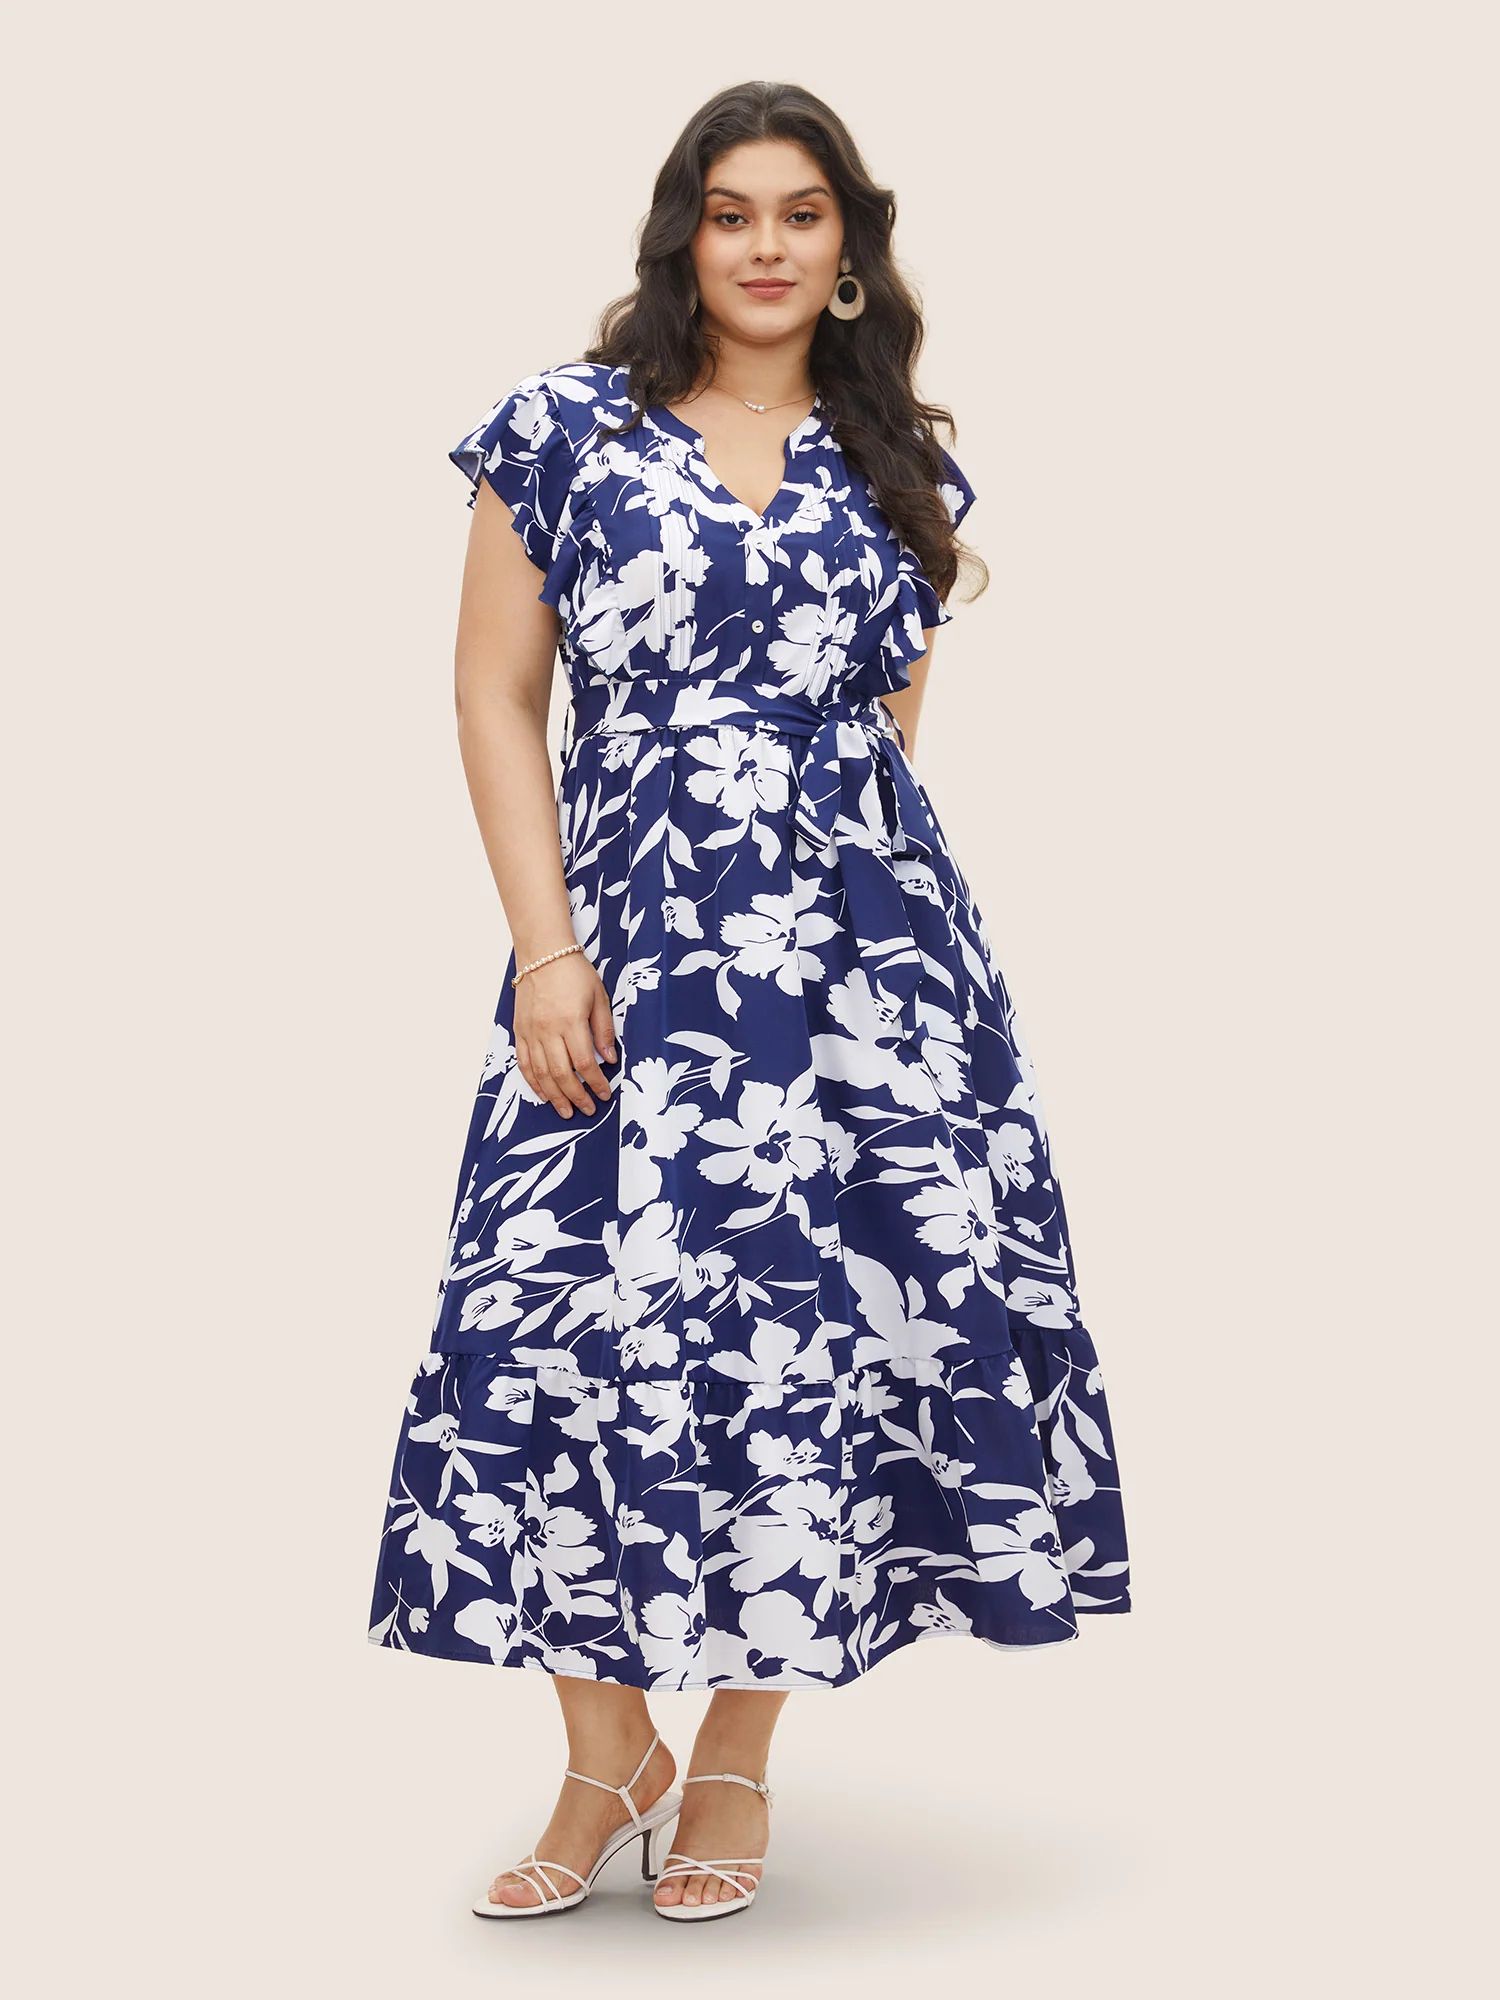 Silhouette Floral Print Ruffle Cap Sleeve Dress | Bloomchic